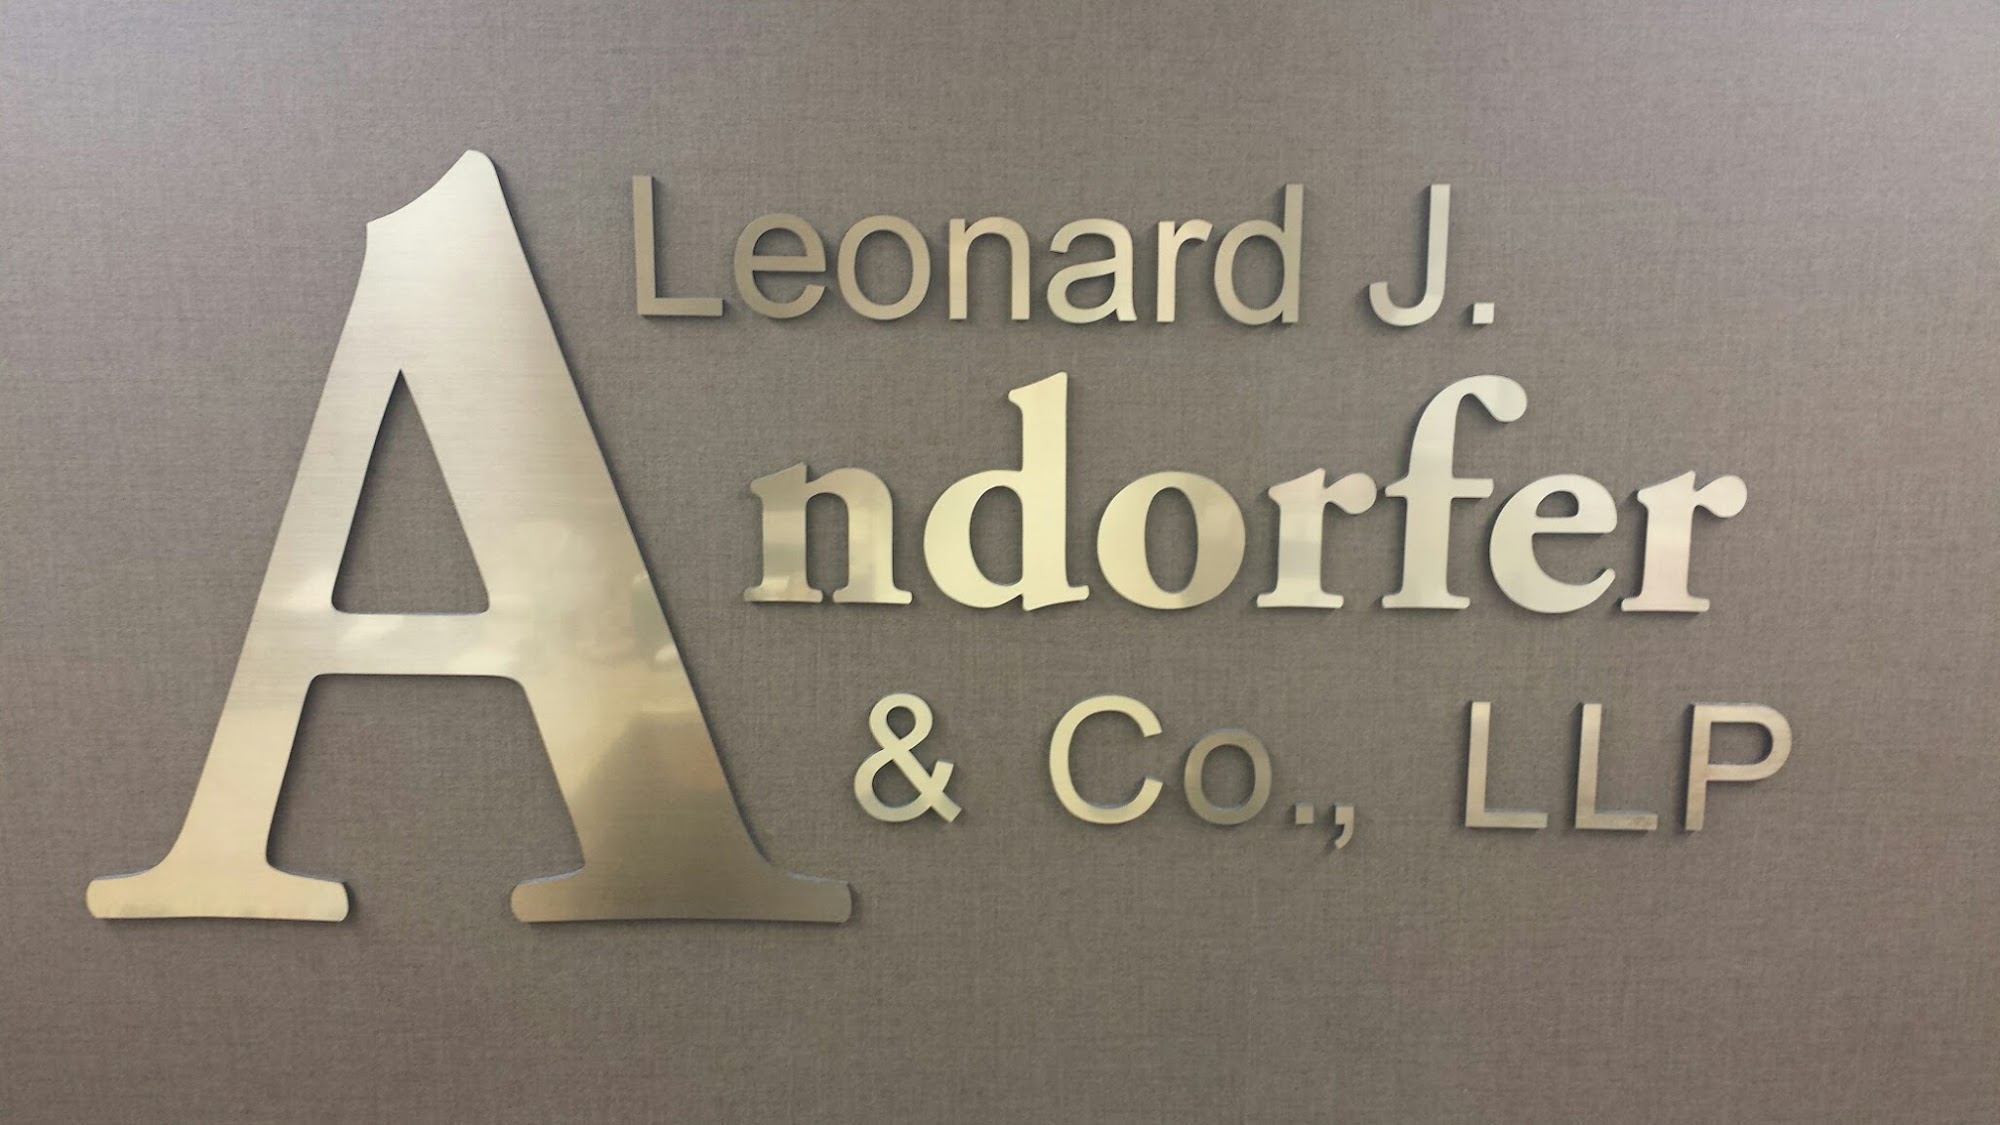 Leonard J Andorfer & Co LLP